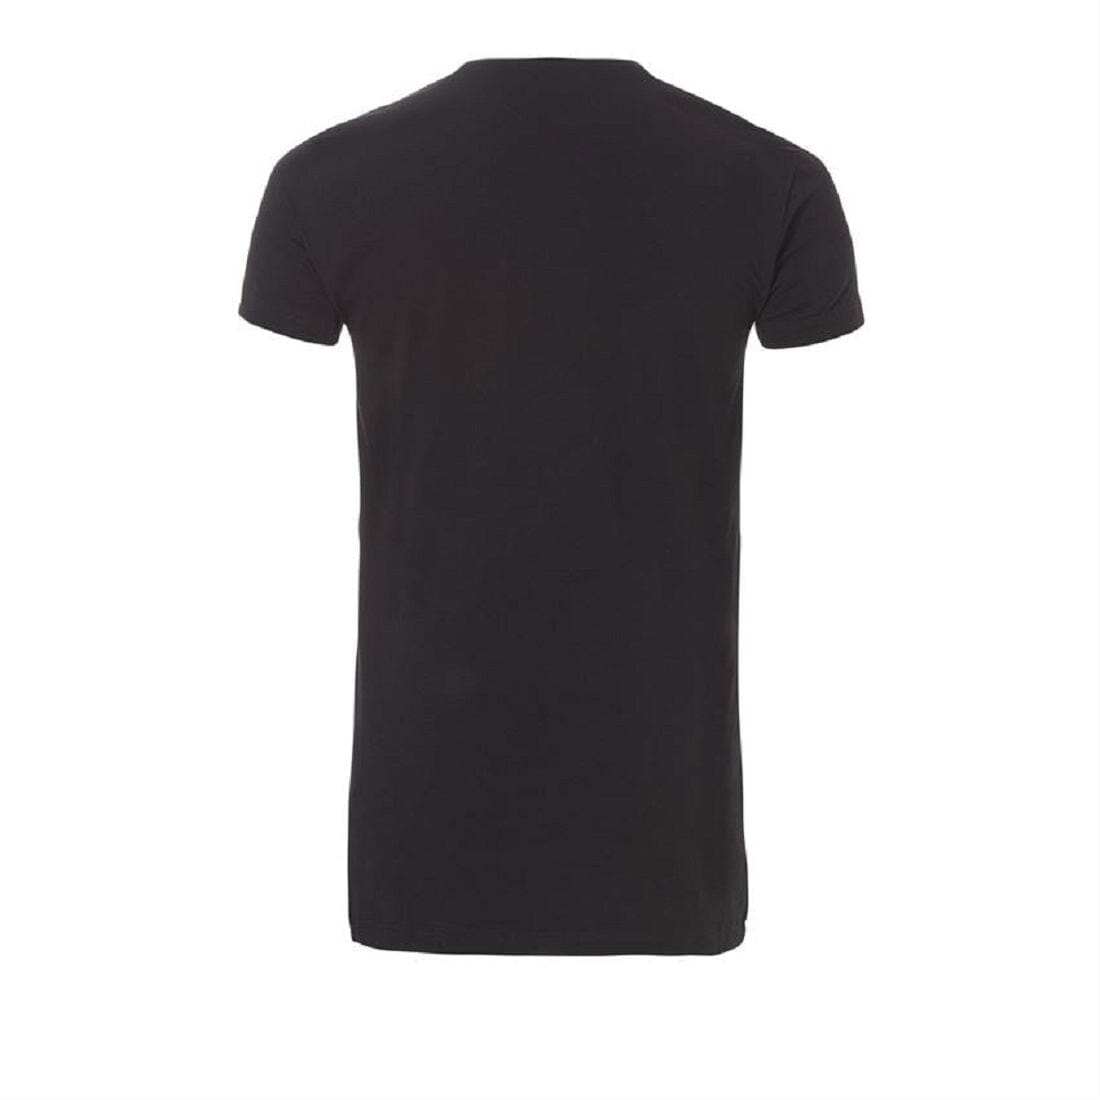 Ten Cate - 30847 - Basic V-Shirt Long 2-pack - Black Shirt Ten Cate 